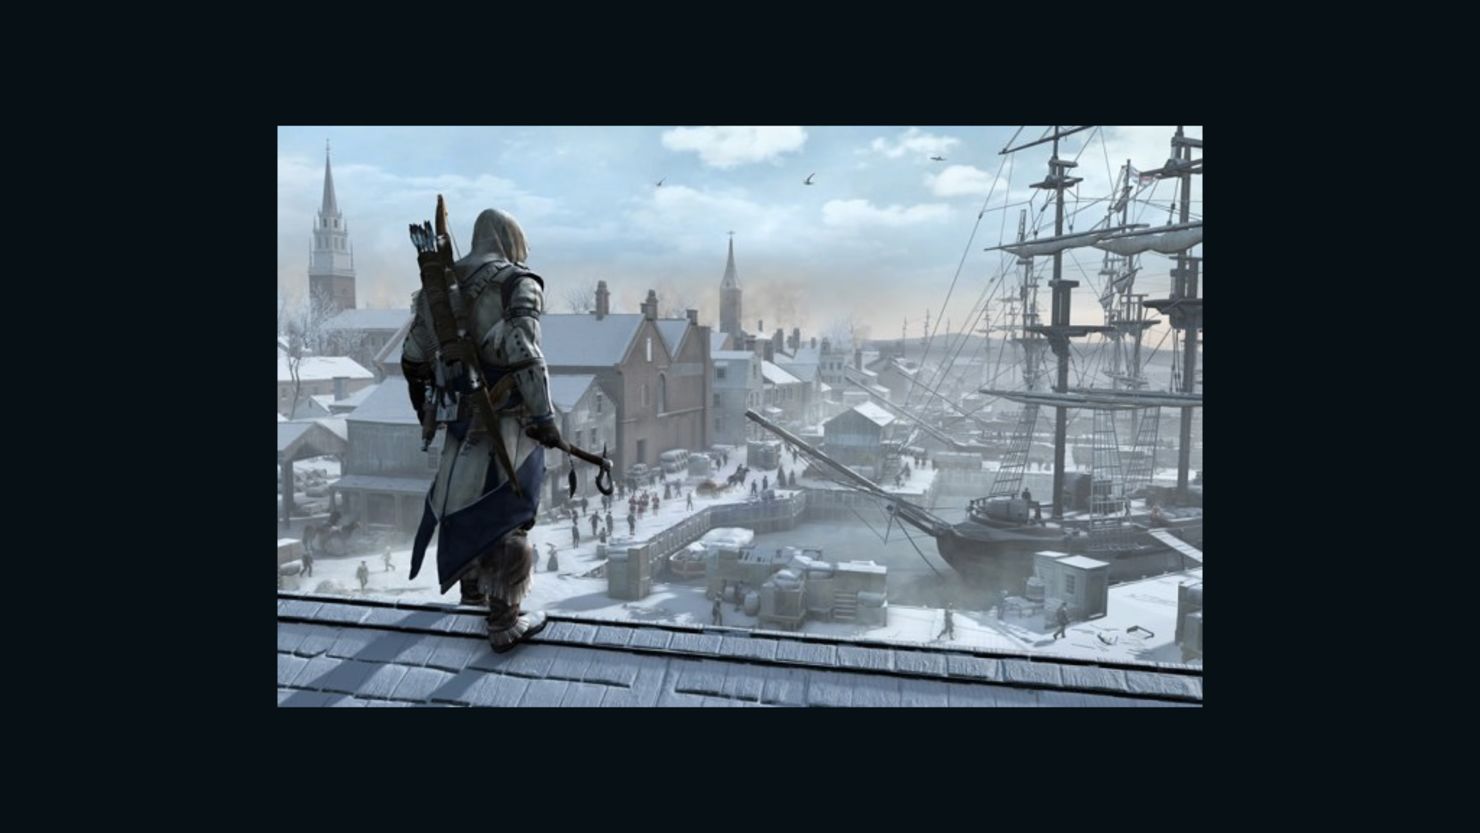 Assassin's Creed III - Wikipedia